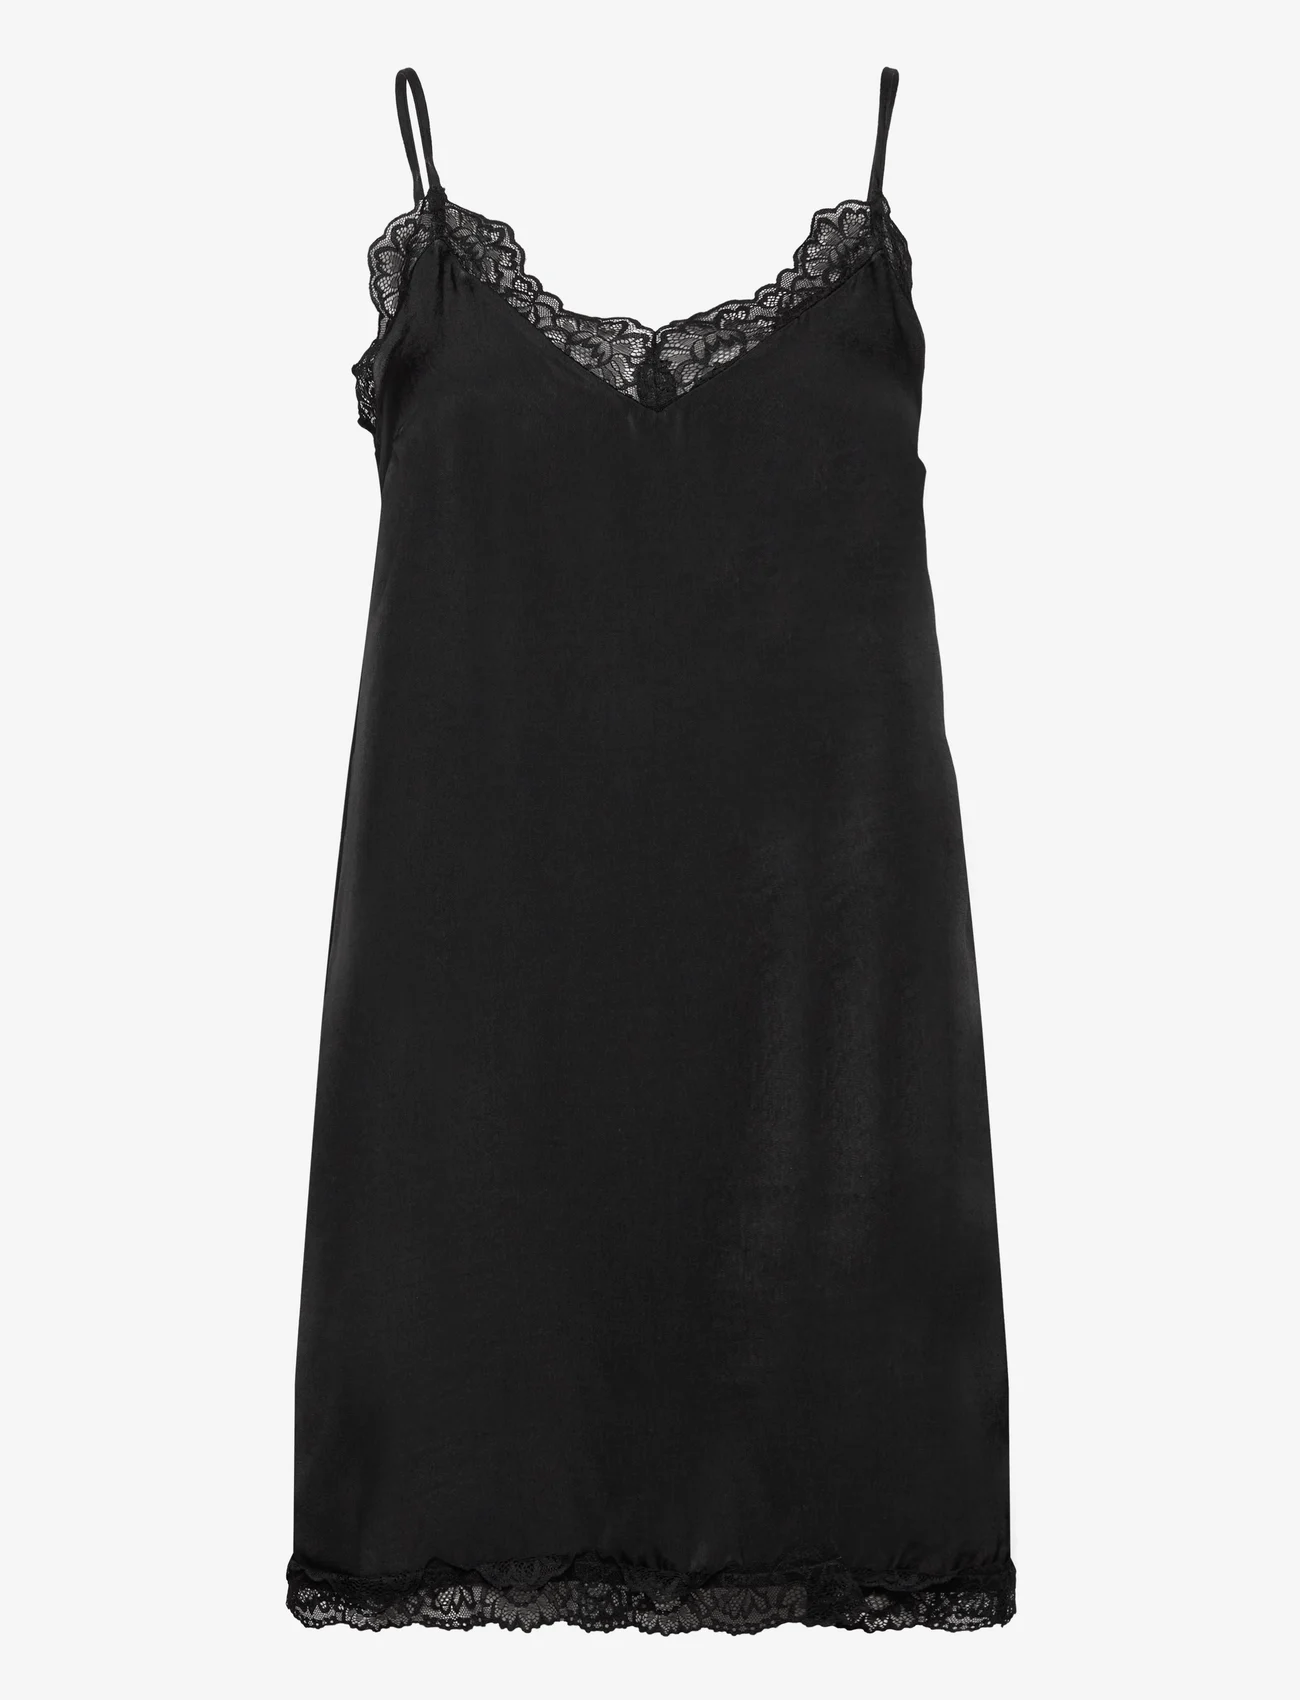 ONLY - ONLFRI SL LACE SINGLET DRESS WVN - Õlapaeltega kleidid - black - 0